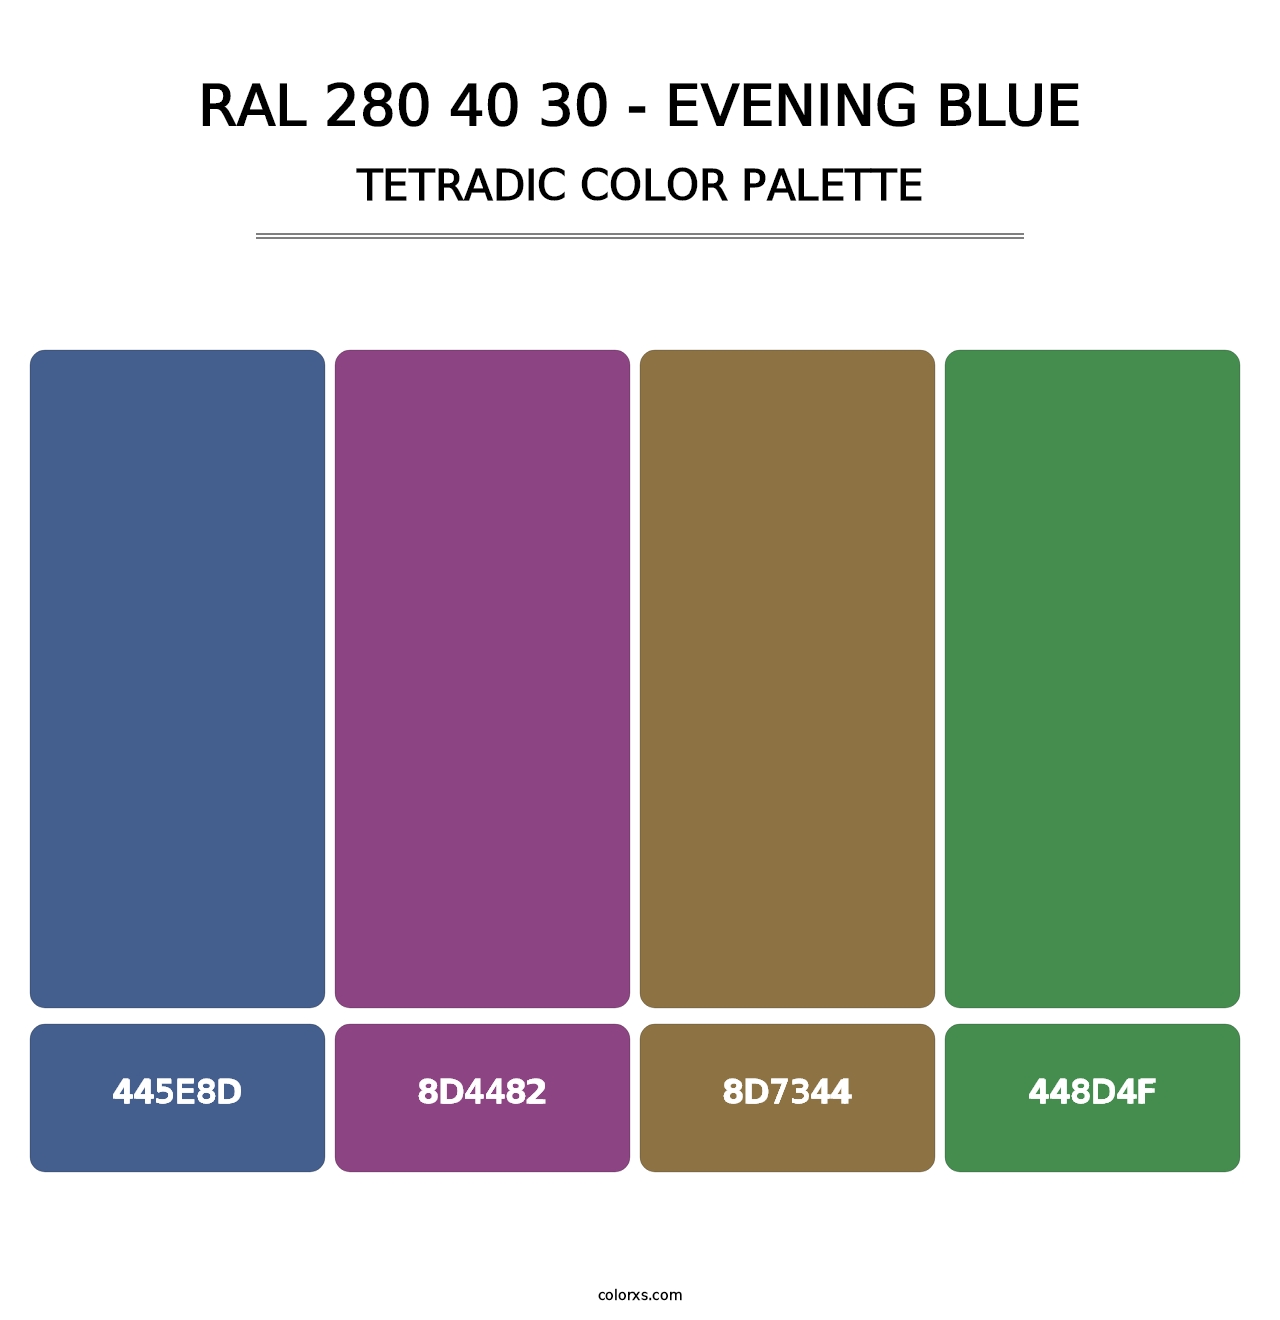 RAL 280 40 30 - Evening Blue - Tetradic Color Palette